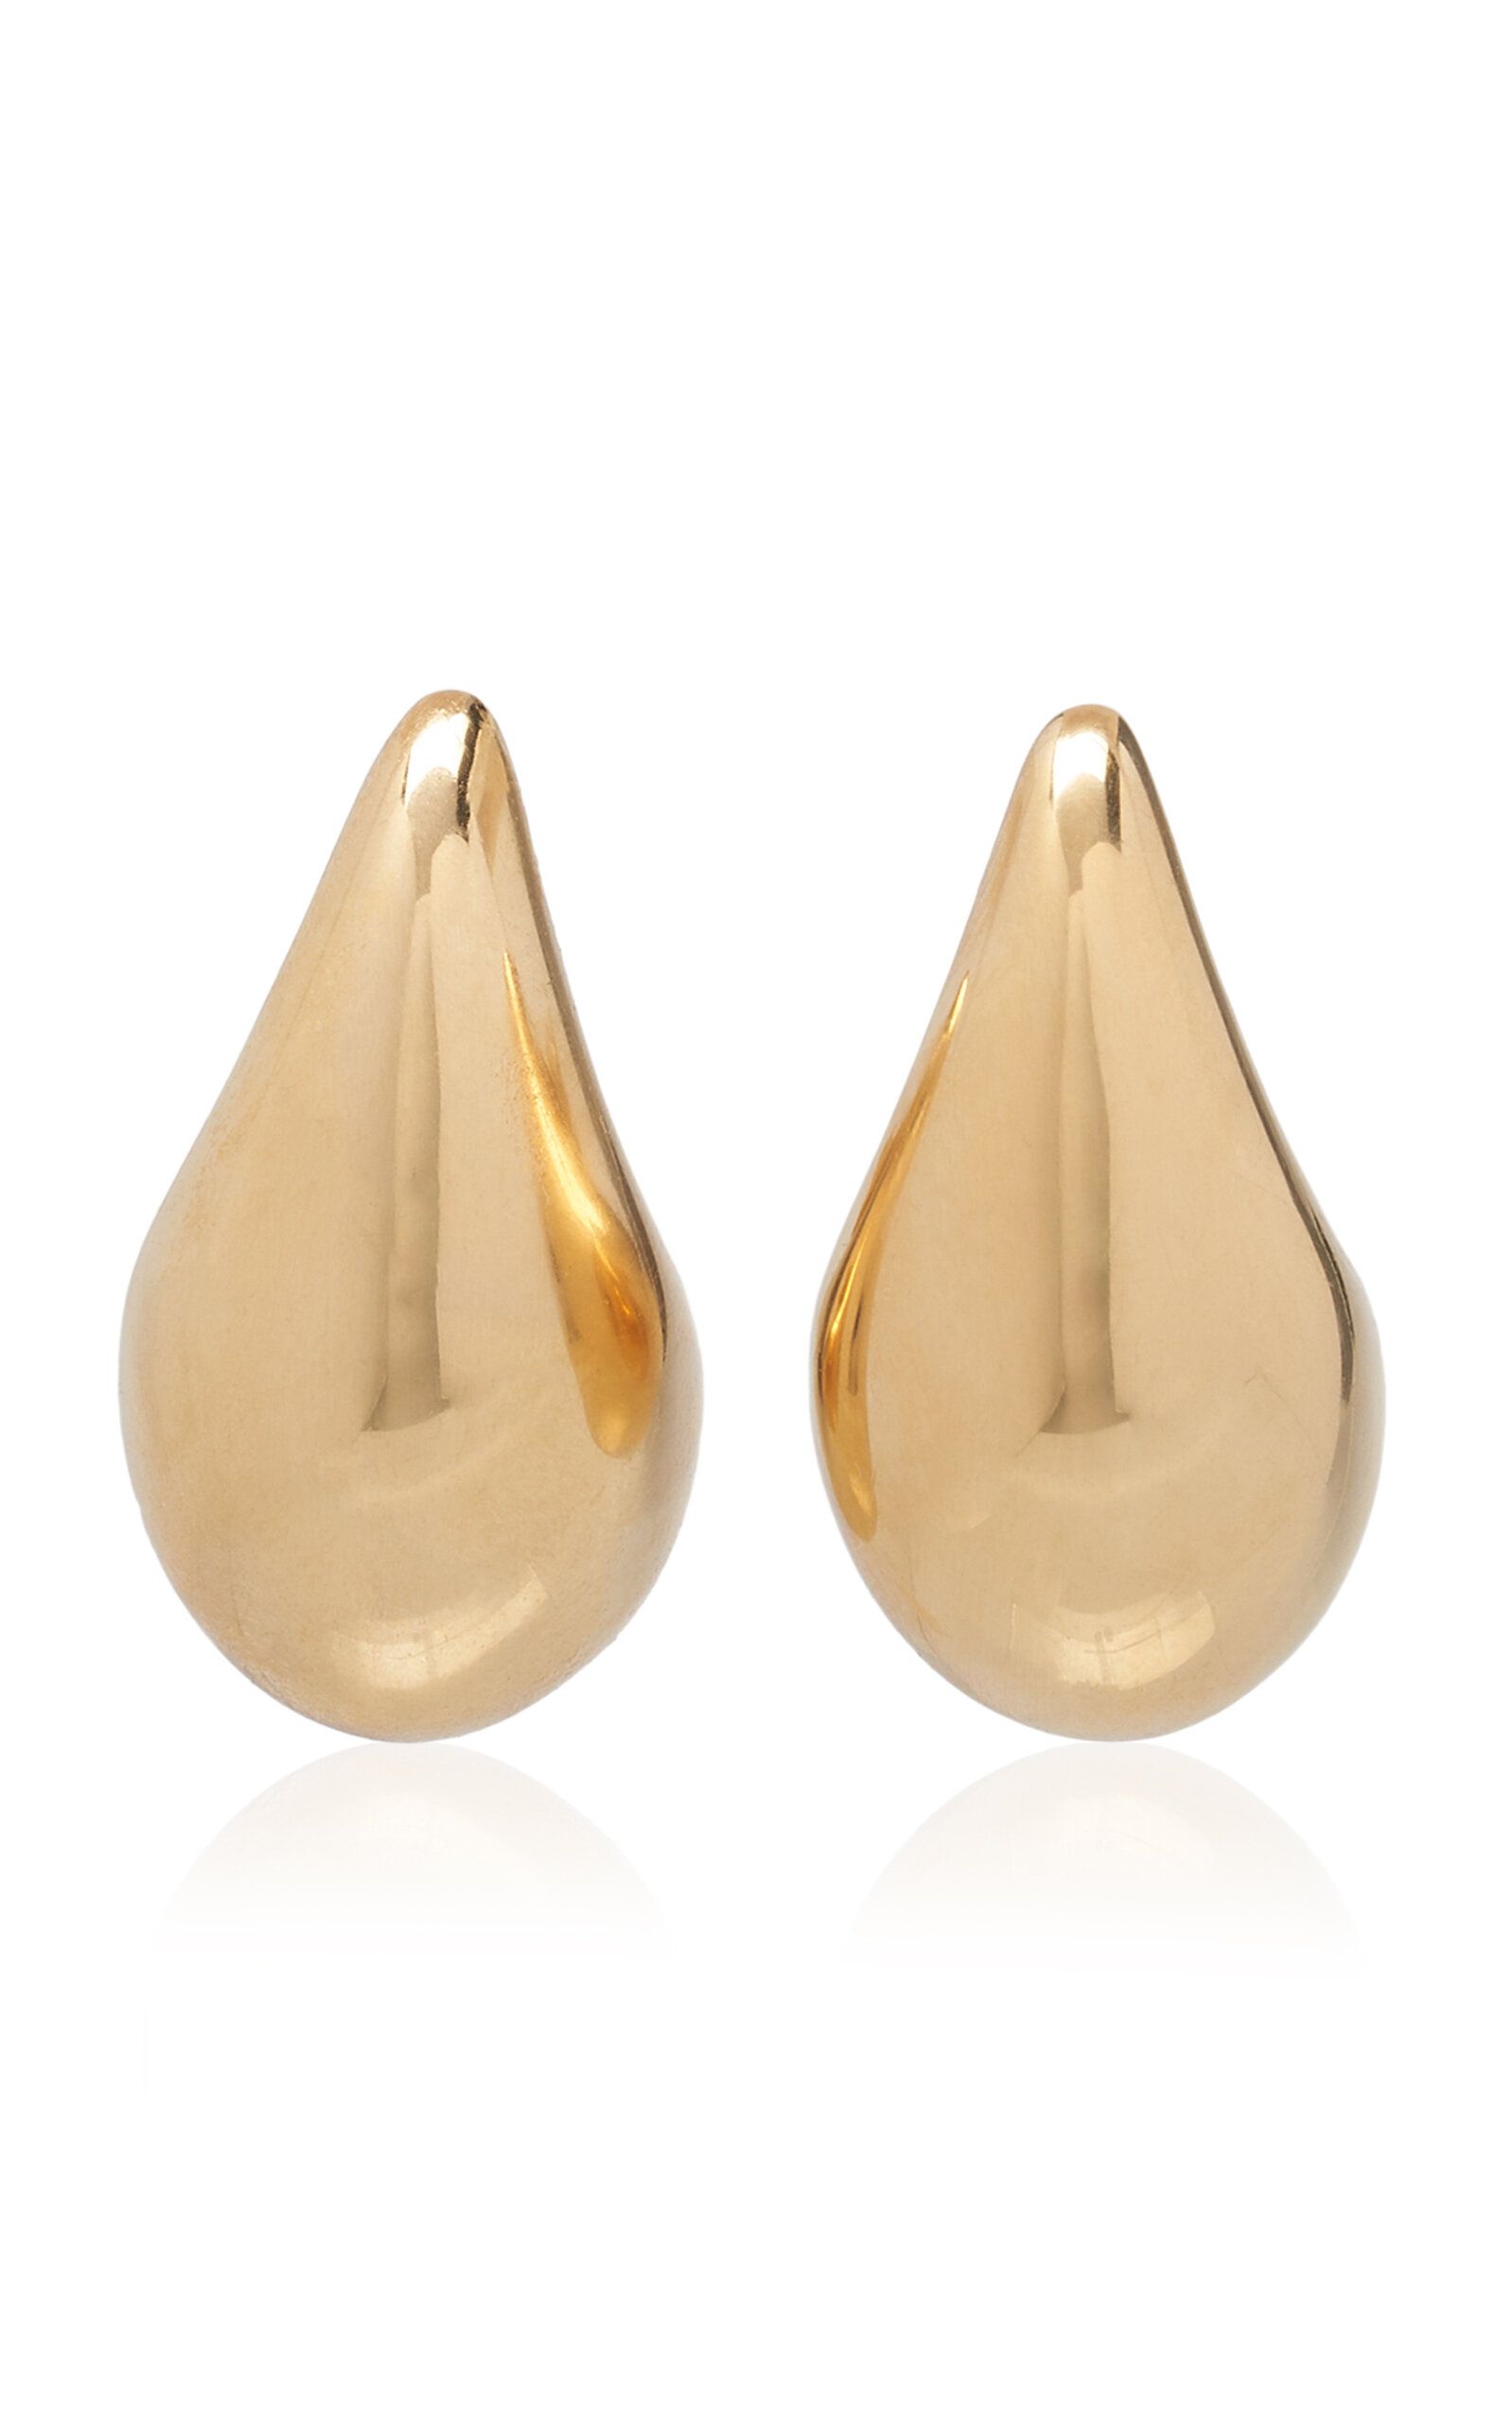 Bottega Veneta - Women's Drop Earrings - Gold - OS - Moda Operandi - Gifts For Her | Moda Operandi (Global)